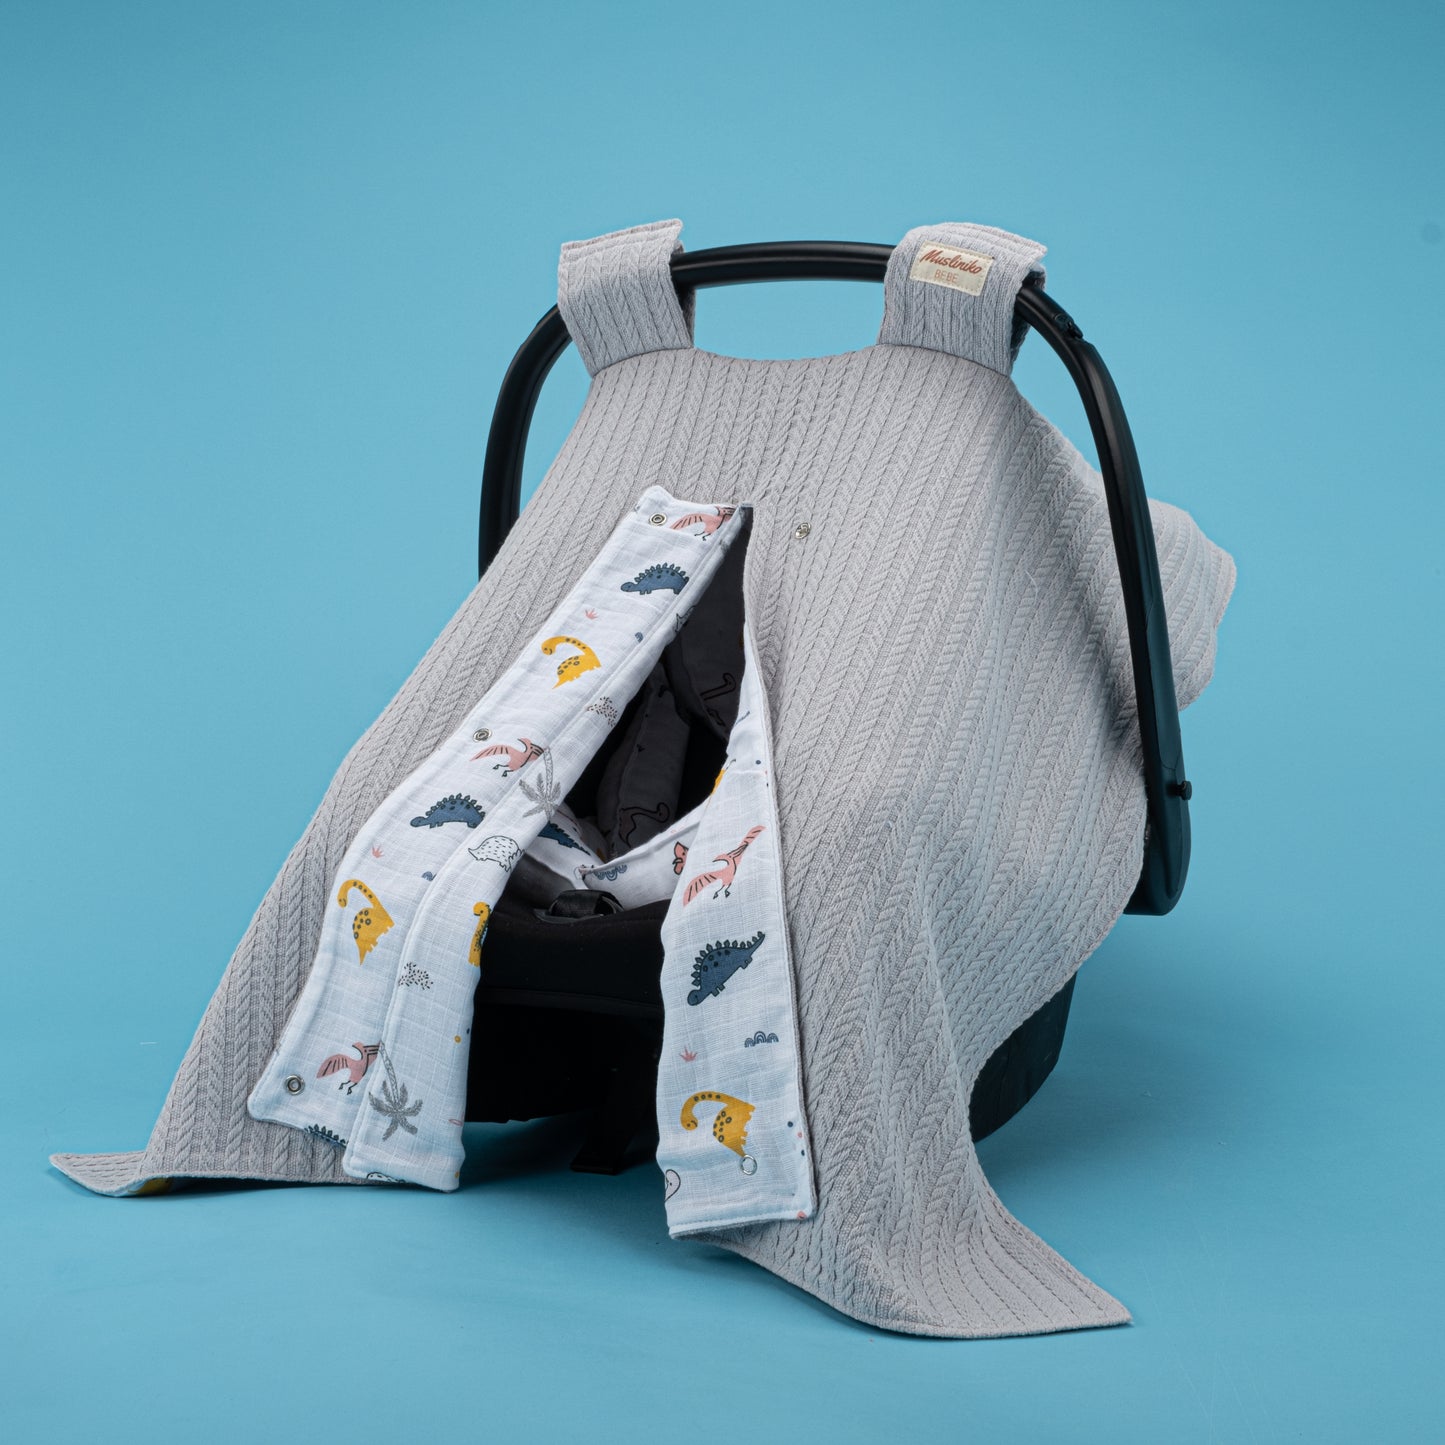 Stroller Cover Set - Double Side - Gray Knit - Dinosaur